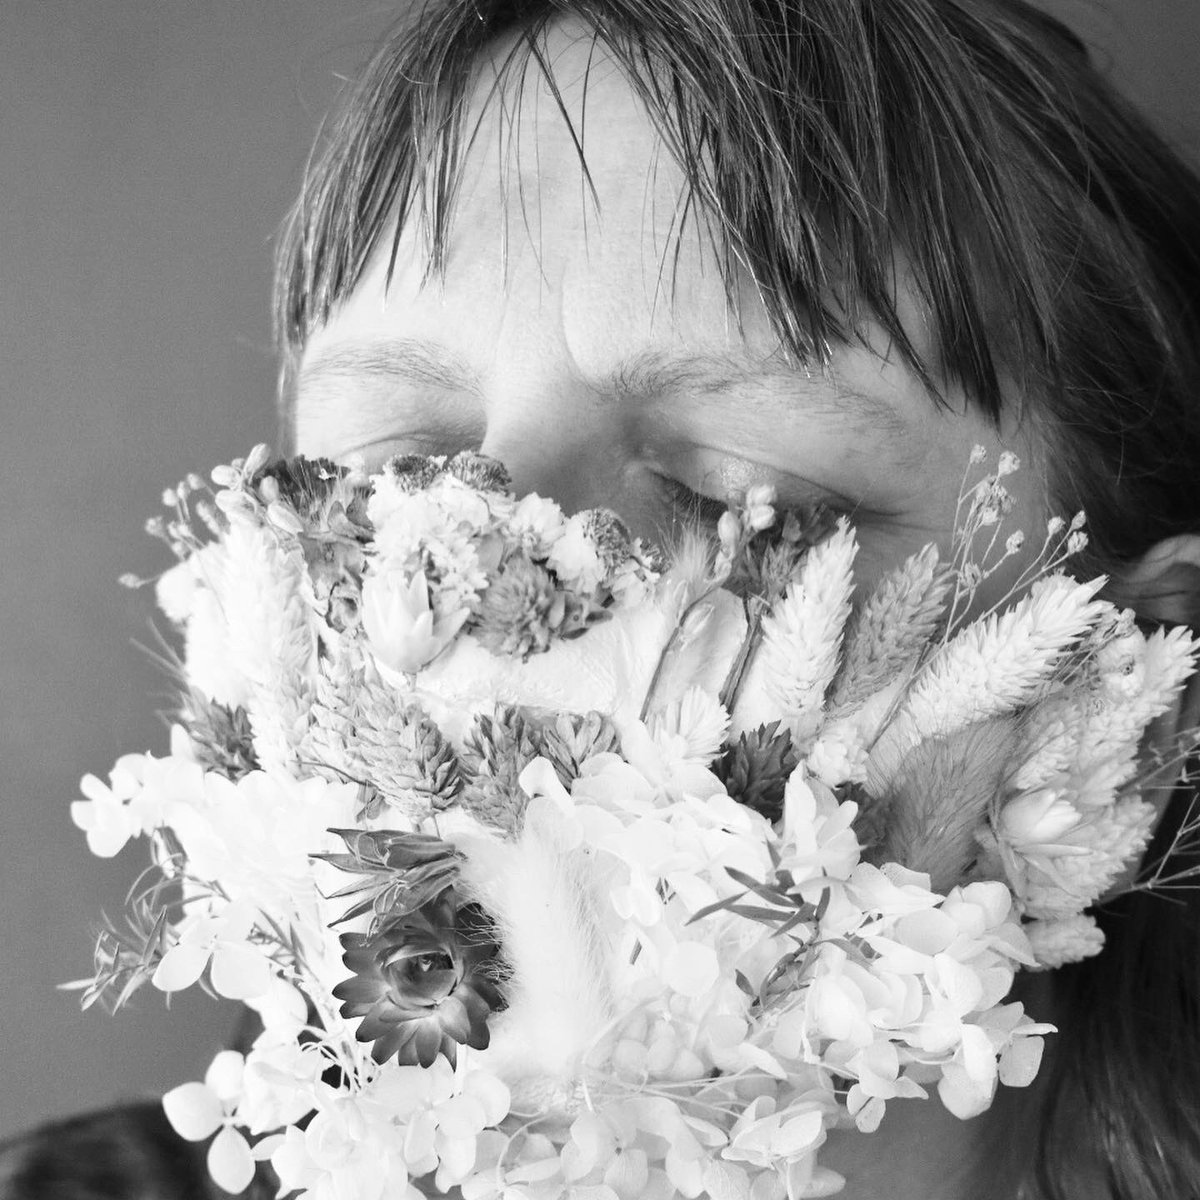 #internationalwomensday #masks #eightstagesofhomicide #homicidetimeline #flowers #driedflowers #silencedwomen #hiddenvoices #vawg #femicide #iwd2021 #phdresearch #fineart #practiceledresearch